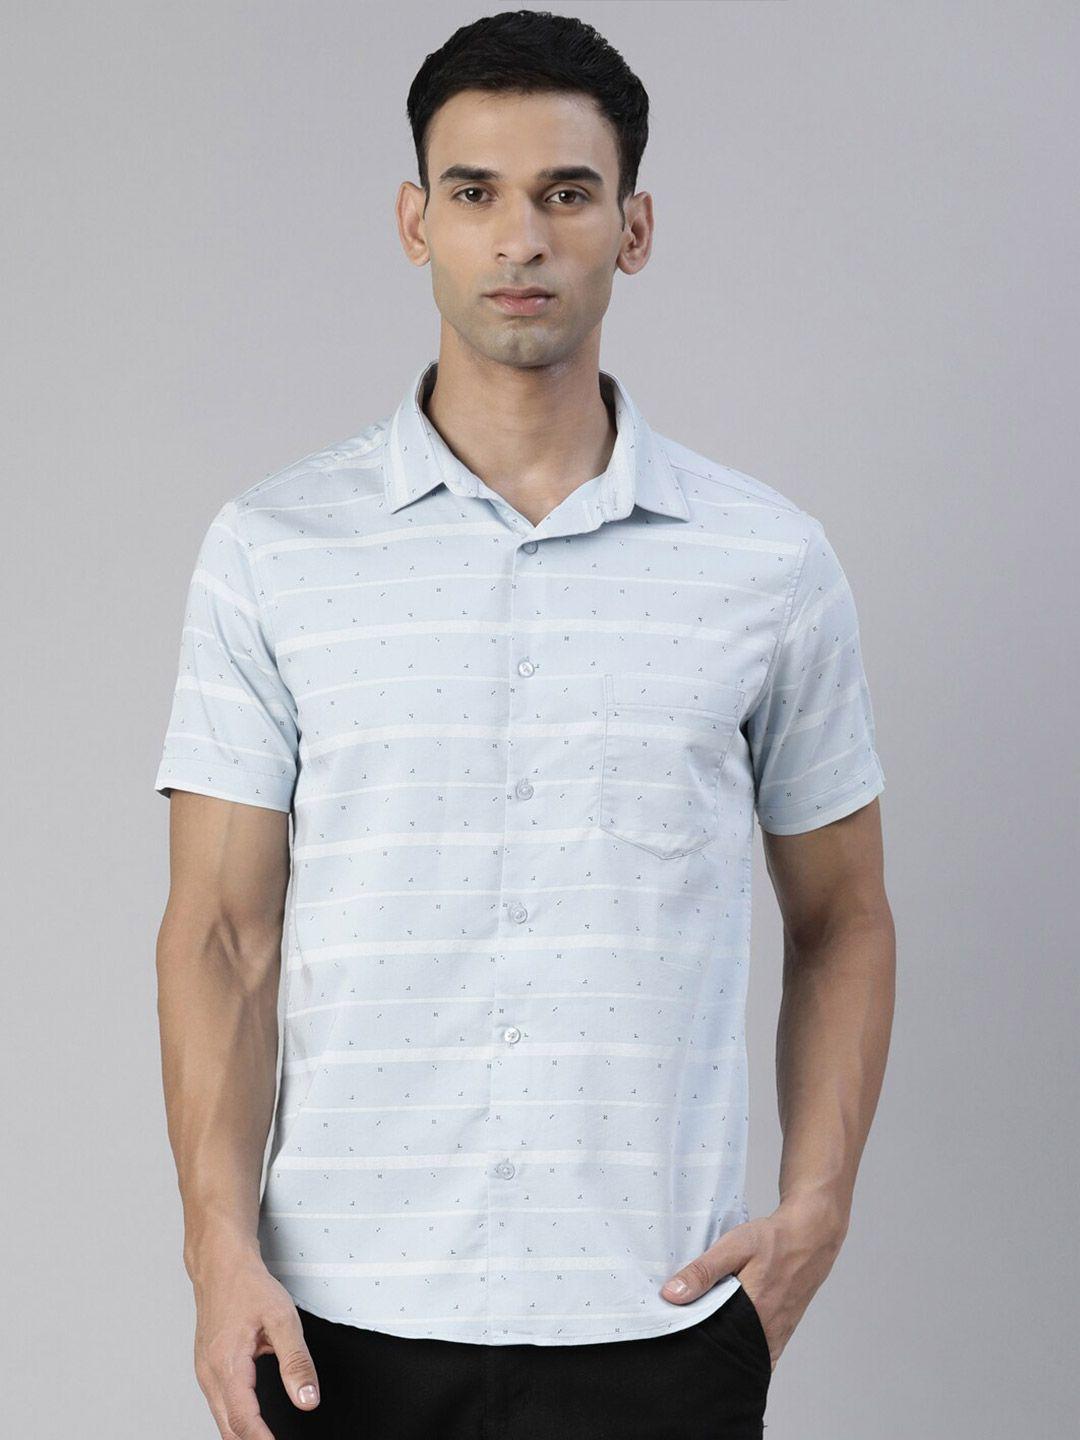 bushirt striped comfort fit pure cotton casual shirt